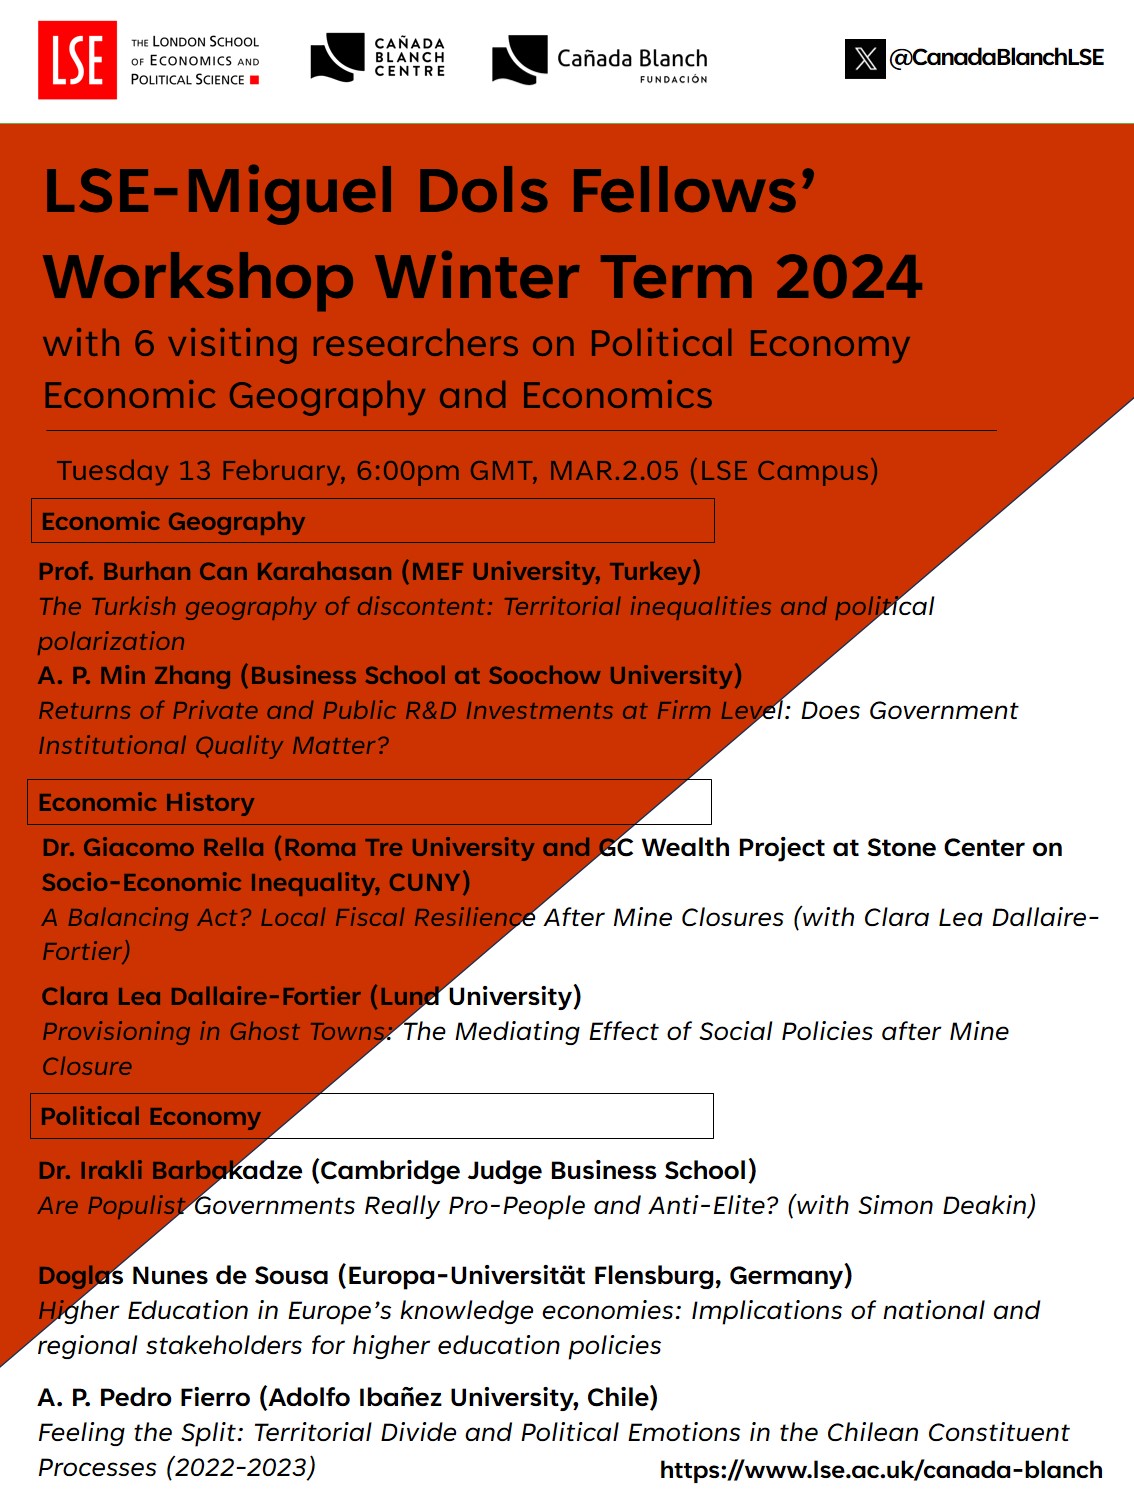 Fellows Winter 2024 - 13 February